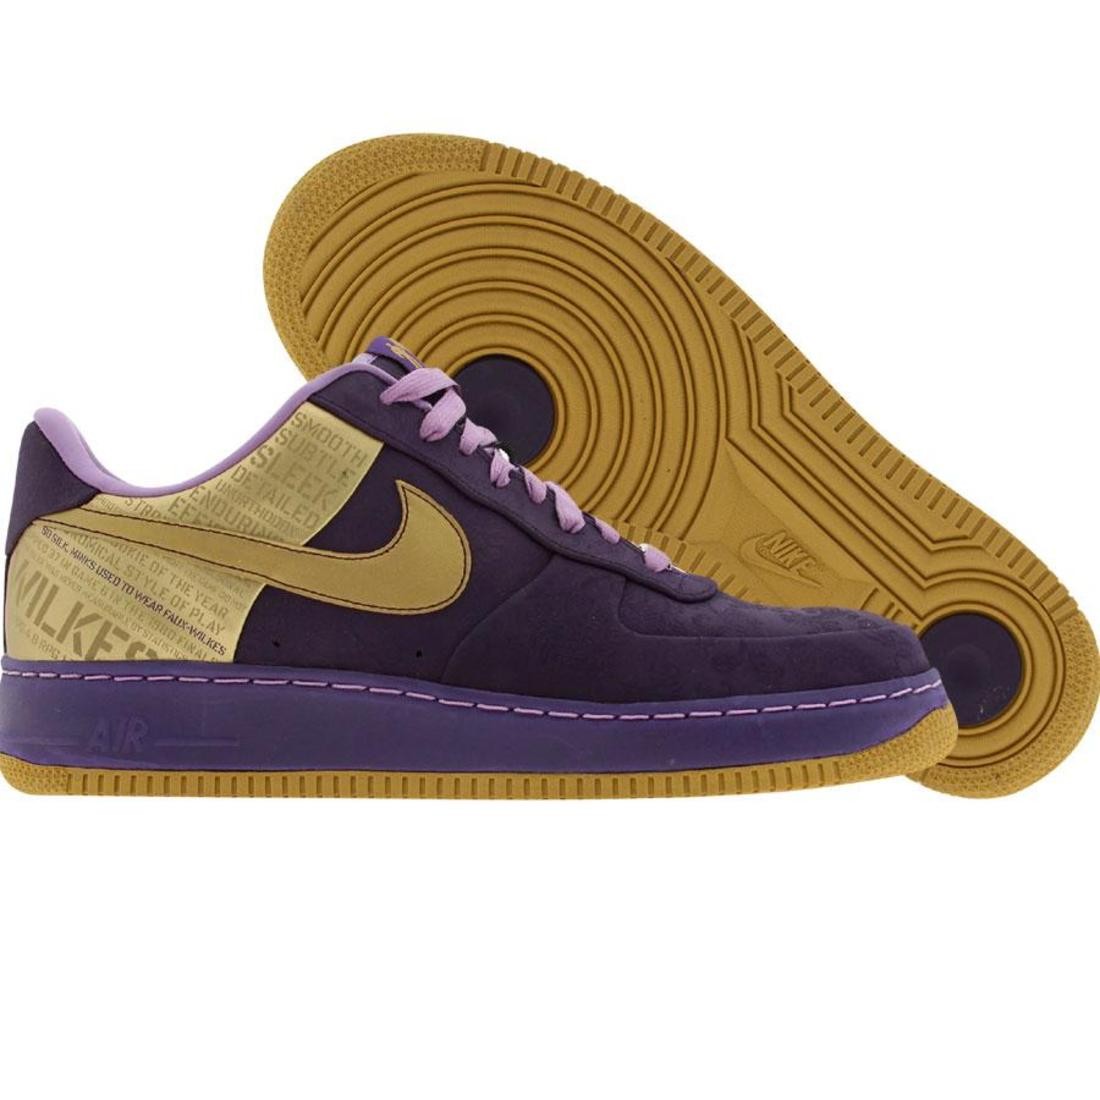 Nike Air Force 1 Low Premium Origional Six Edition - Jamaal Wilkes (quasar purple metallic gold / orchid)